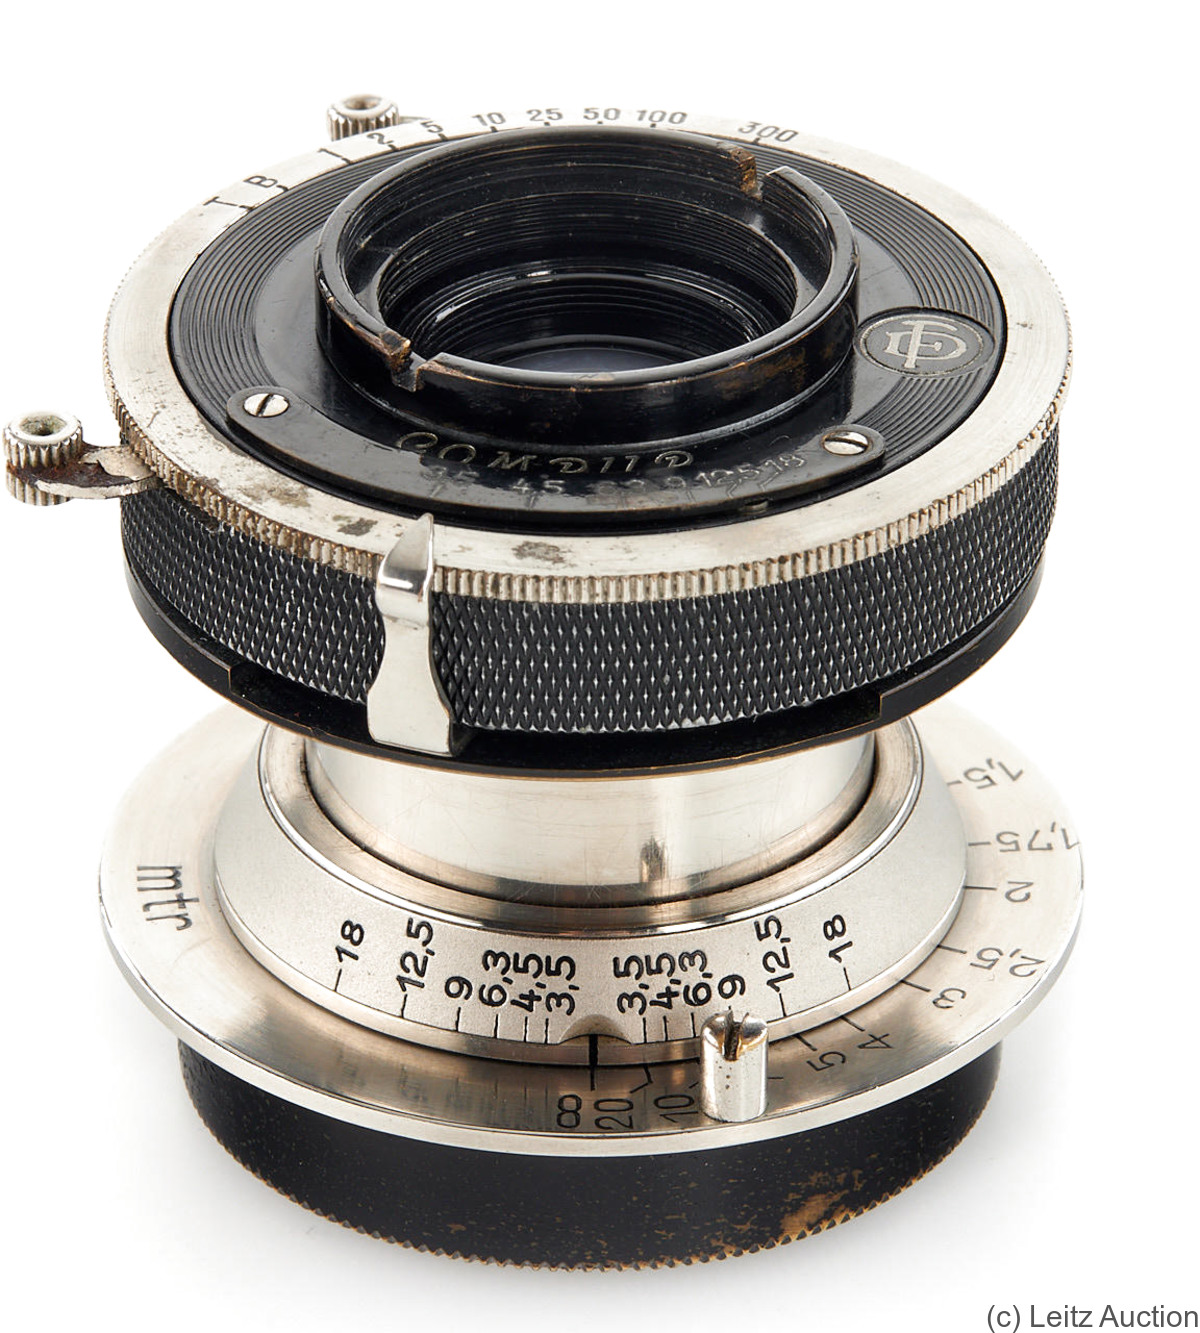 Leitz: 50mm (5cm) f3.5 Elmar Compur (SM) camera